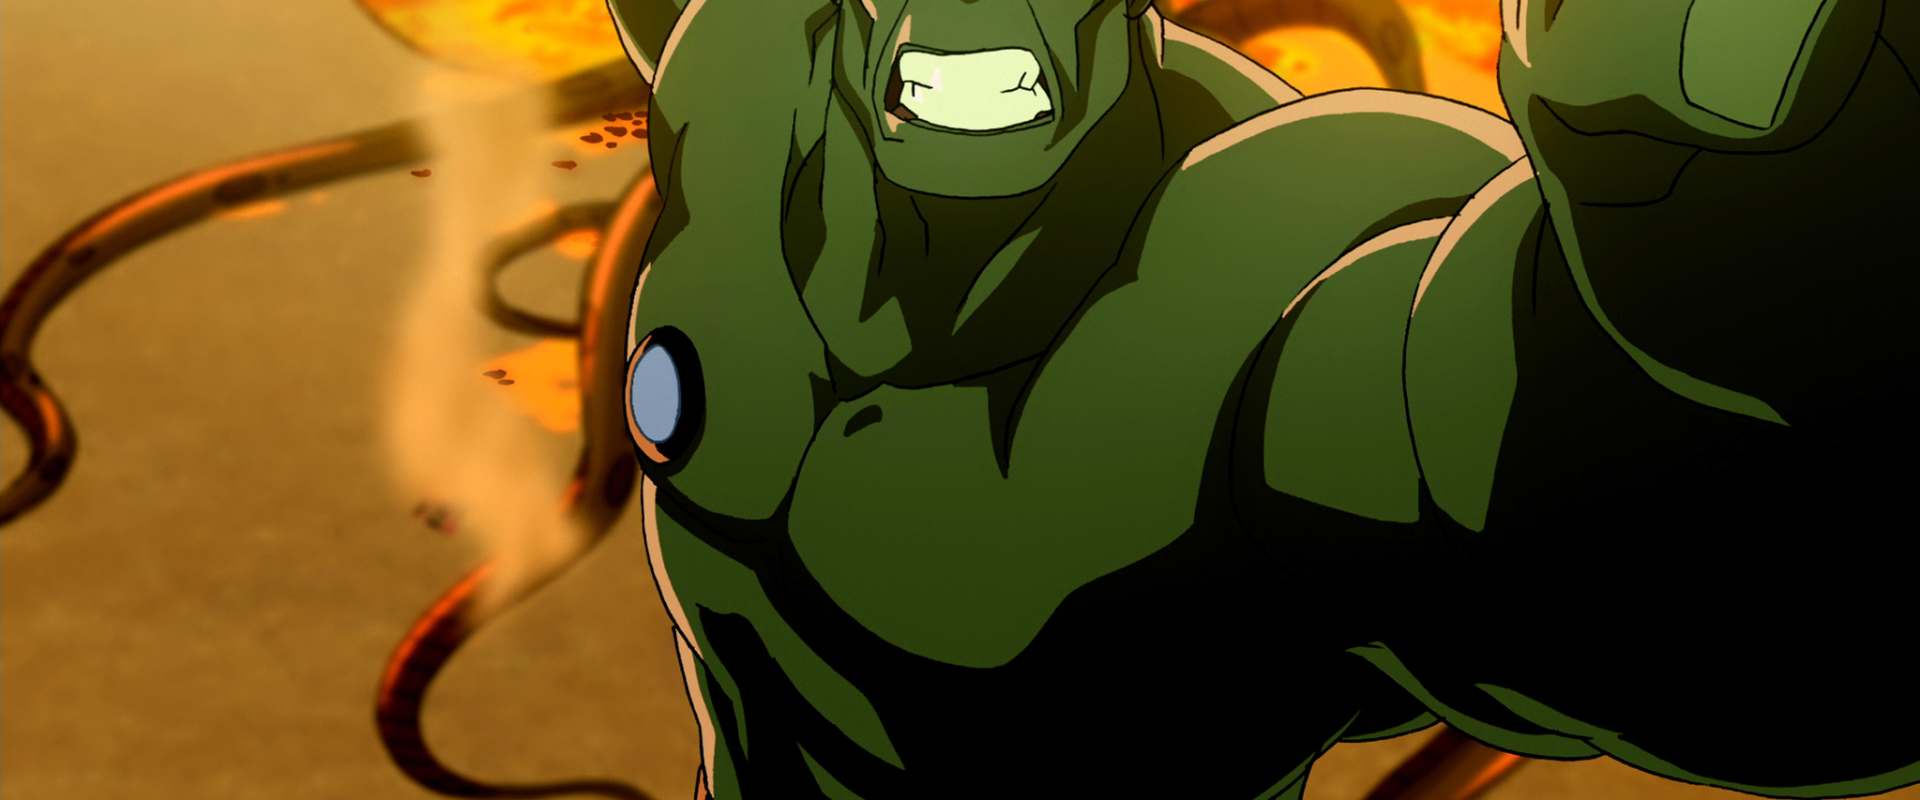 Planet Hulk background 2